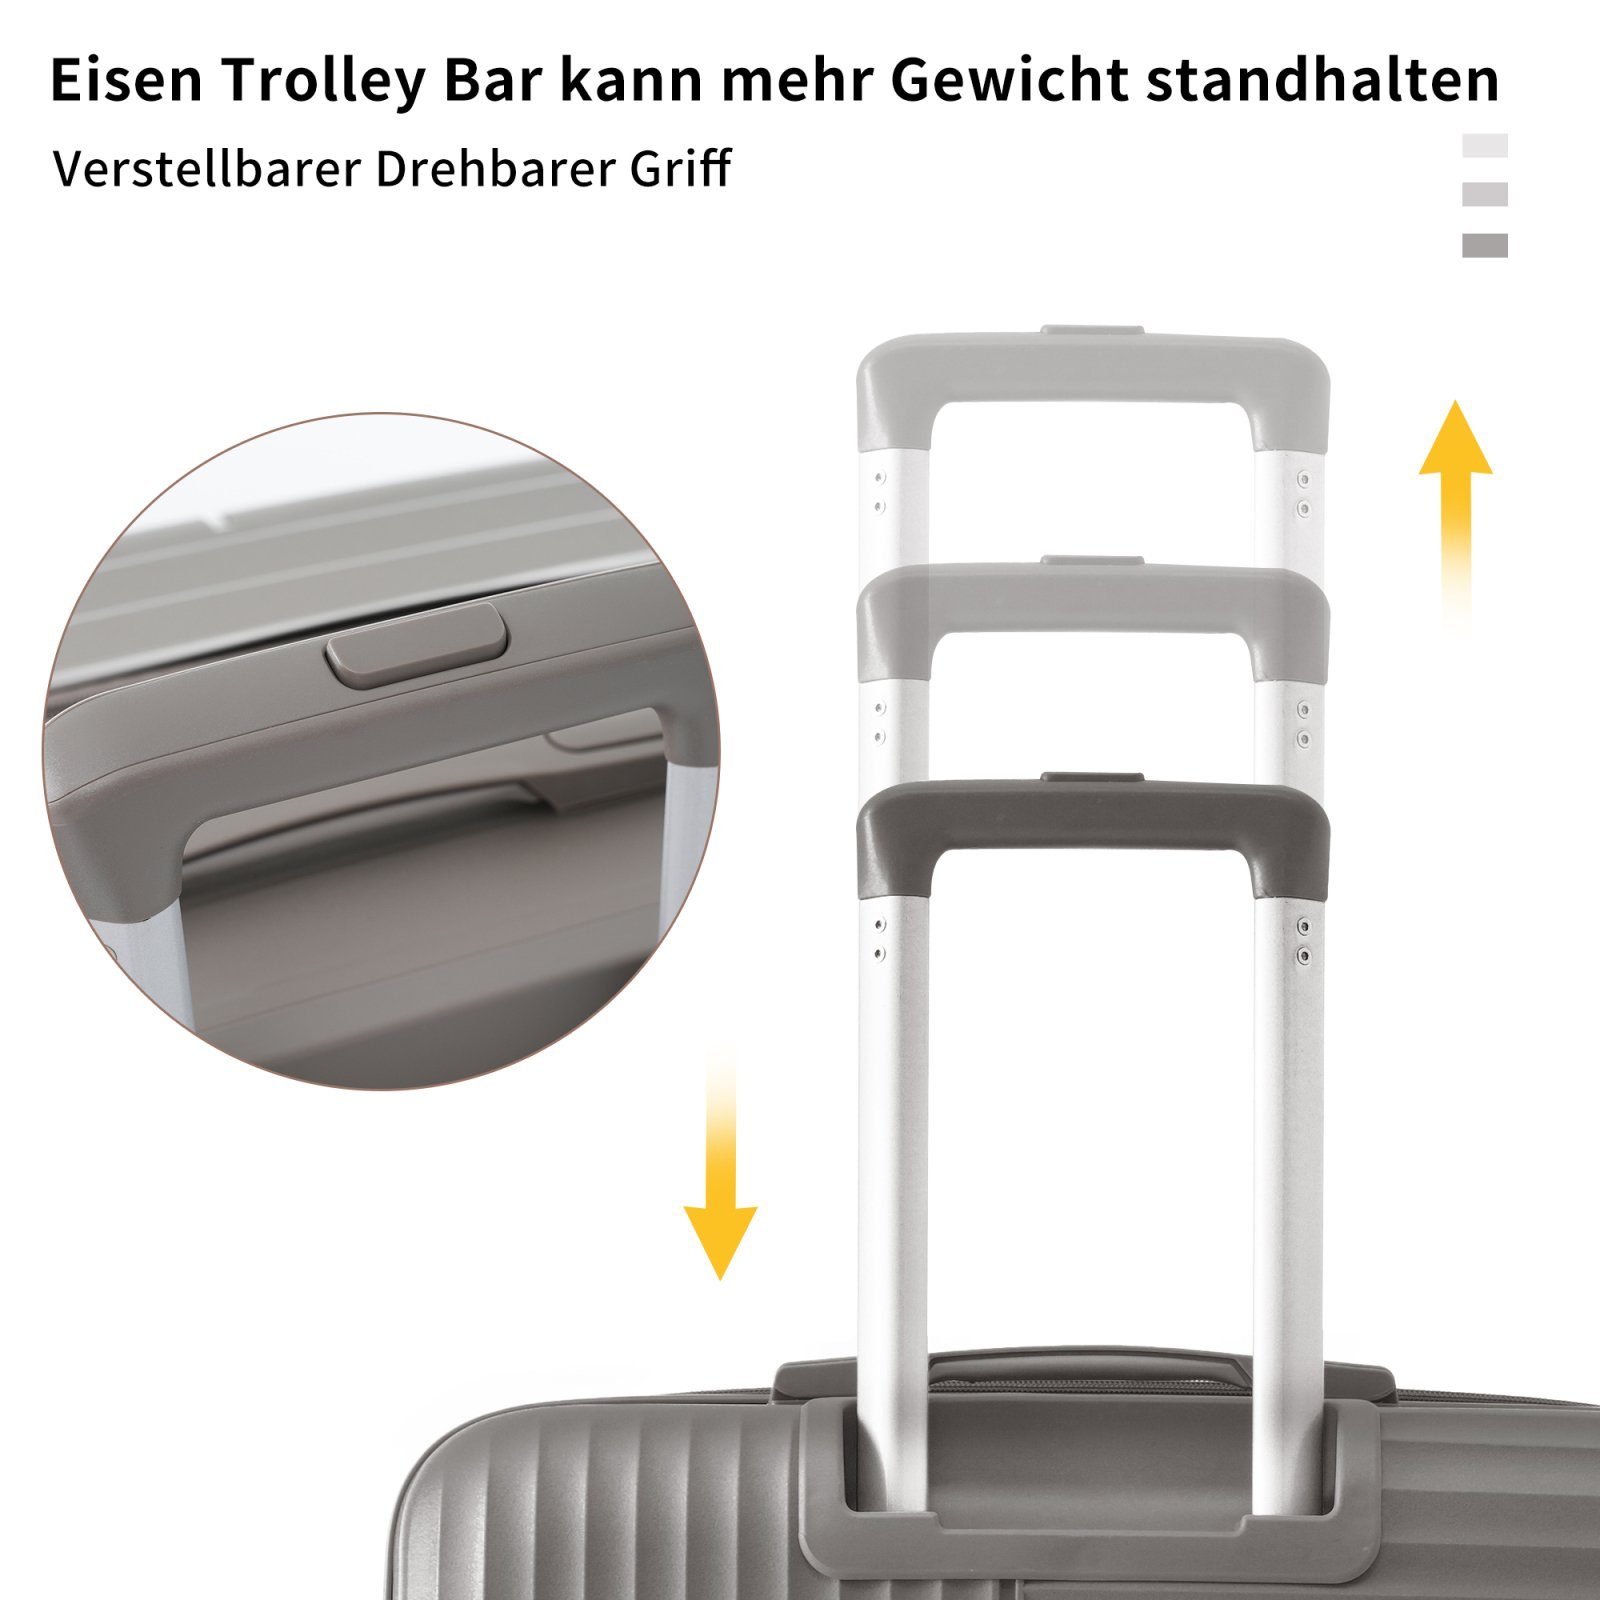 mit Innenfächern Kofferset Trolleyset, SEEZSSA tlg)Handgepäcktrolley grau Kofferset TSA-Schloss, M-L-XL-Set(3 PP-Gepäck mit